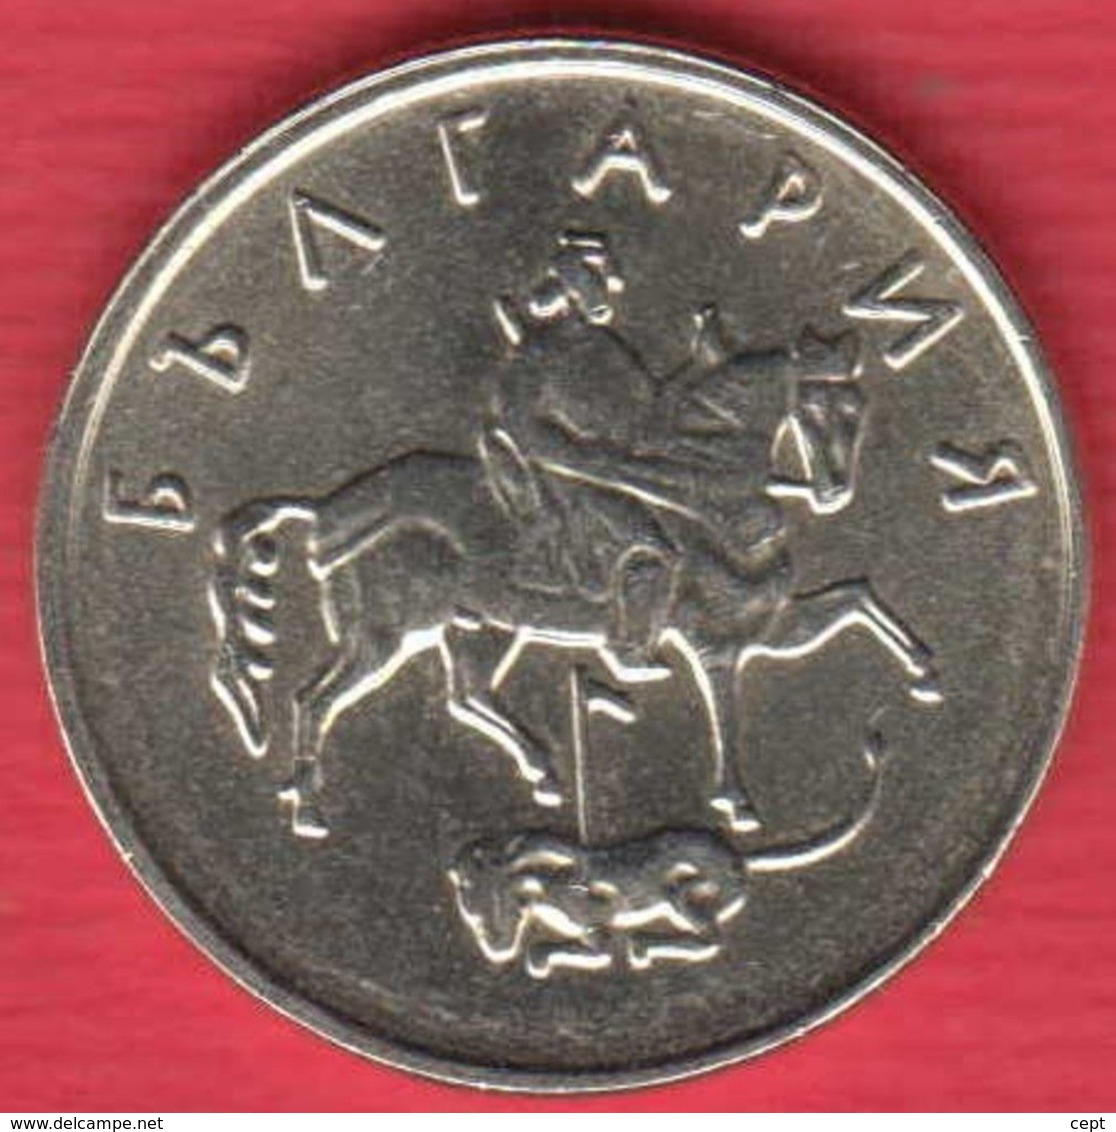 0,10 Lv - Bulgaria 1999 Year - Coin - Bulgarien